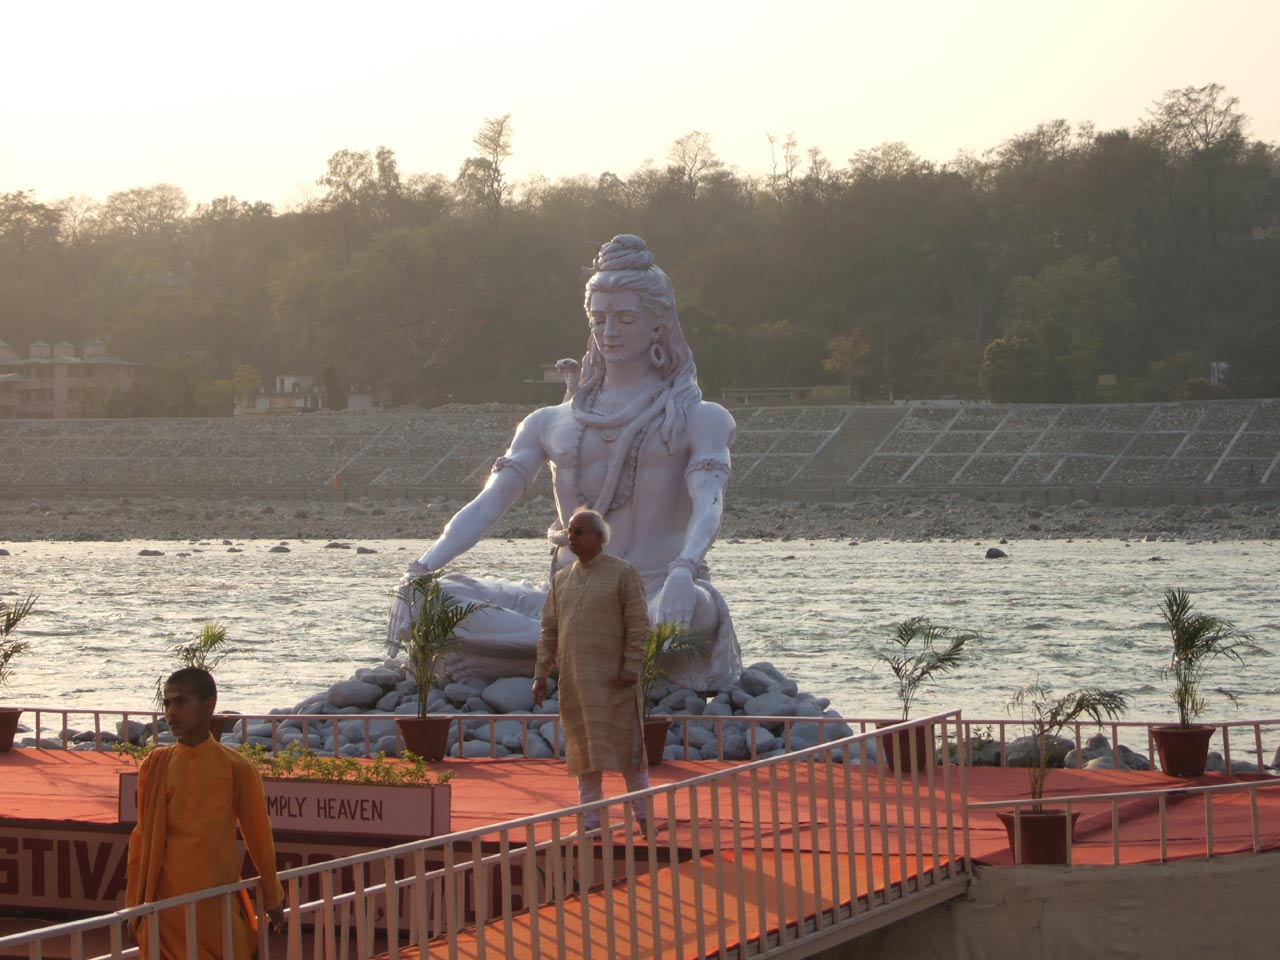 https://blogger.googleusercontent.com/img/b/R29vZ2xl/AVvXsEhHJp8wwvpLWwQH9xGhqacINC7H7urxnX3Co96Bj8ysxTgiuOveh7dc1tbRbTgeVj39DAAYkxgybi2mbQf9Qdv3815y0TZXlCVpozIOPl0vhqcxd5ROJzEM87OFXtlah69L4AiFAI4z0JNc/s1600/india-rishikesh-statues-wallpapers.jpg